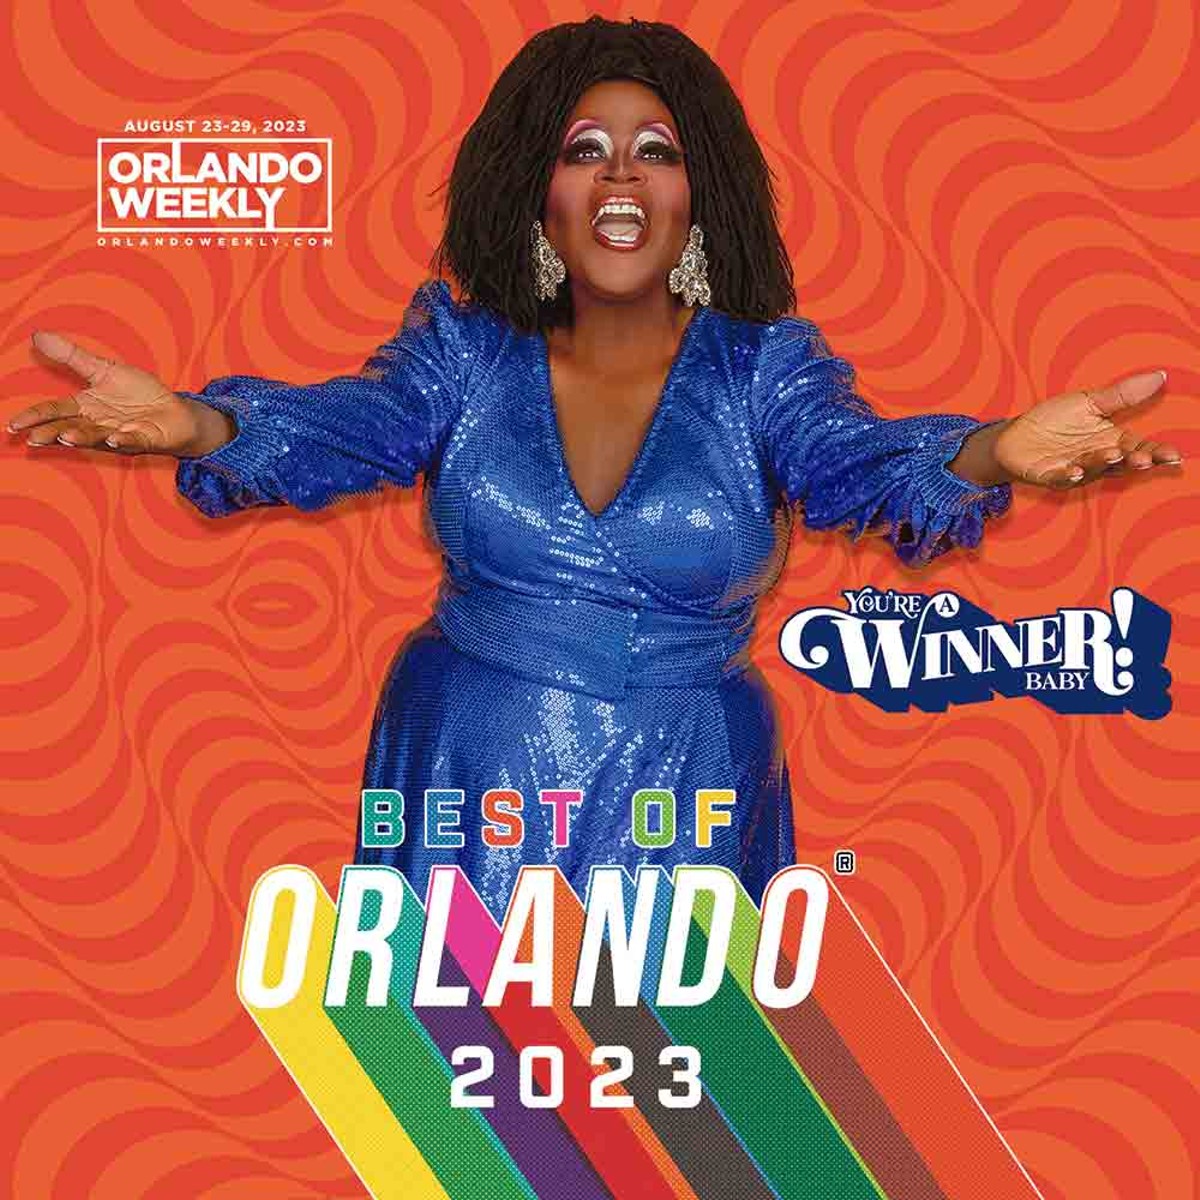 Best of Orlando